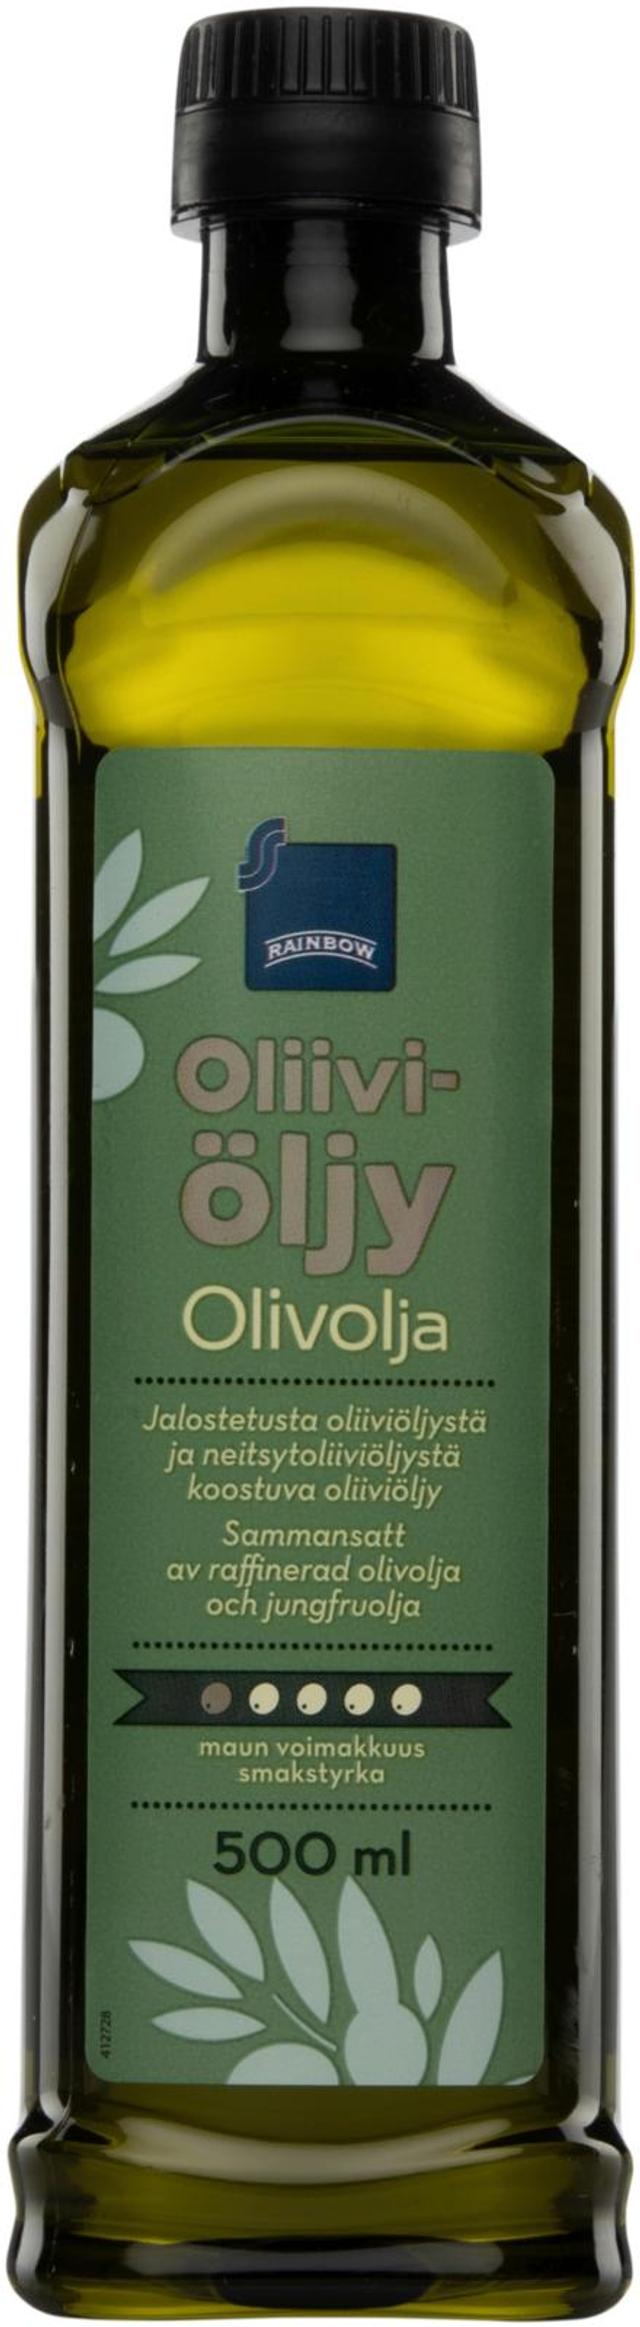 Rainbow 500ml oliiviöljy